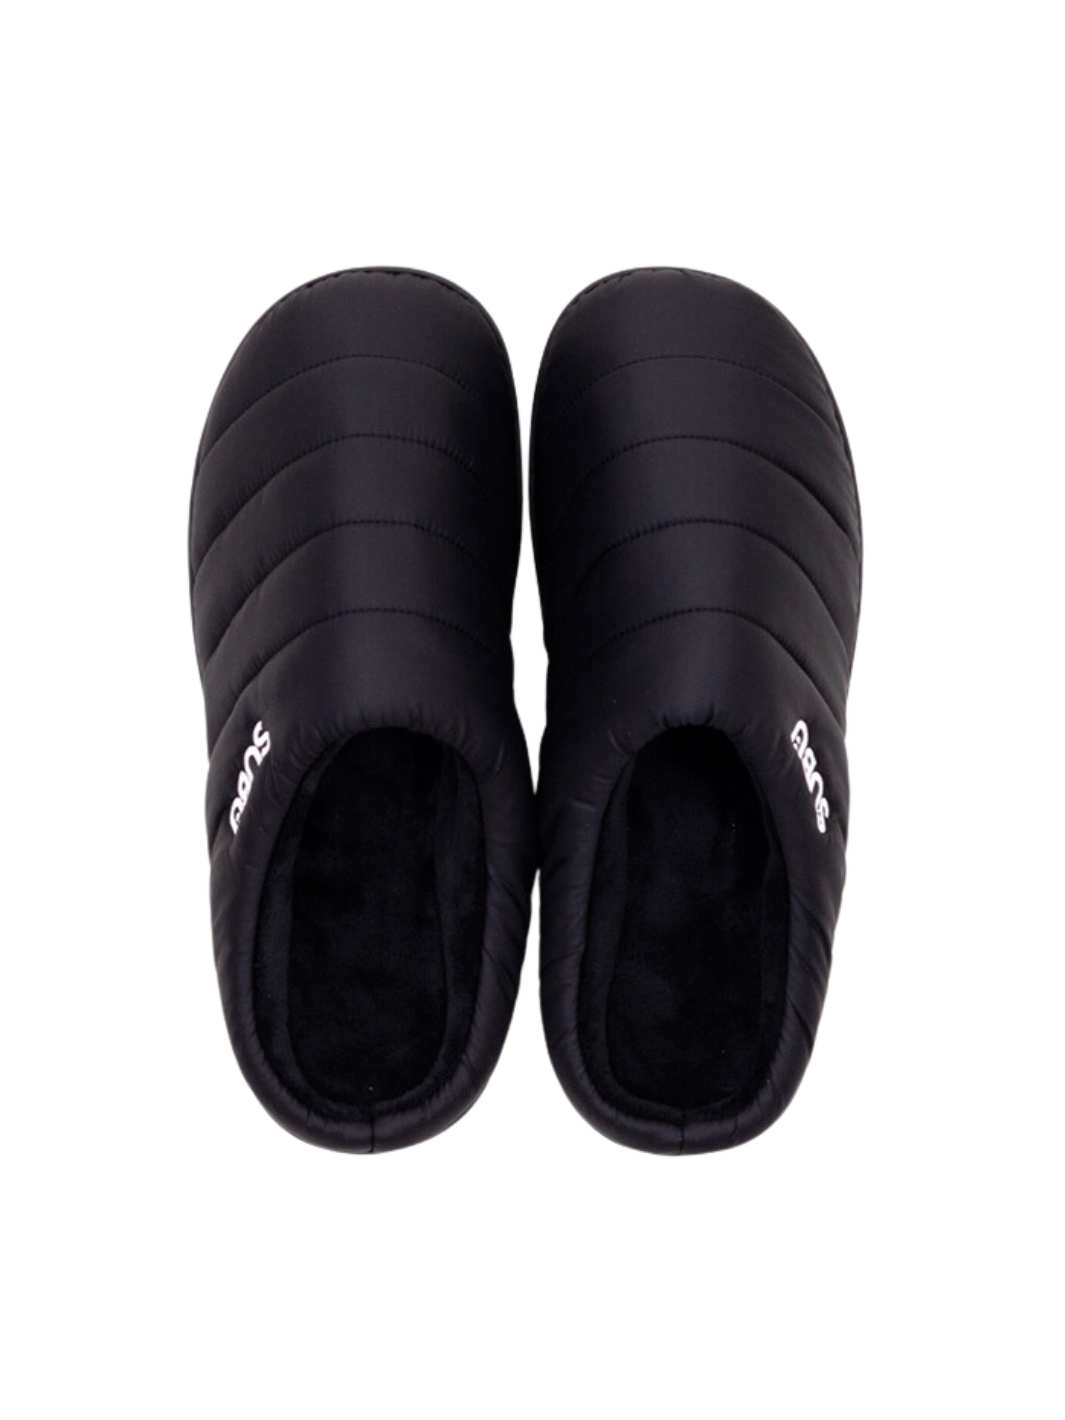 Subu Shoes Slip-On | Slippers Classic Black